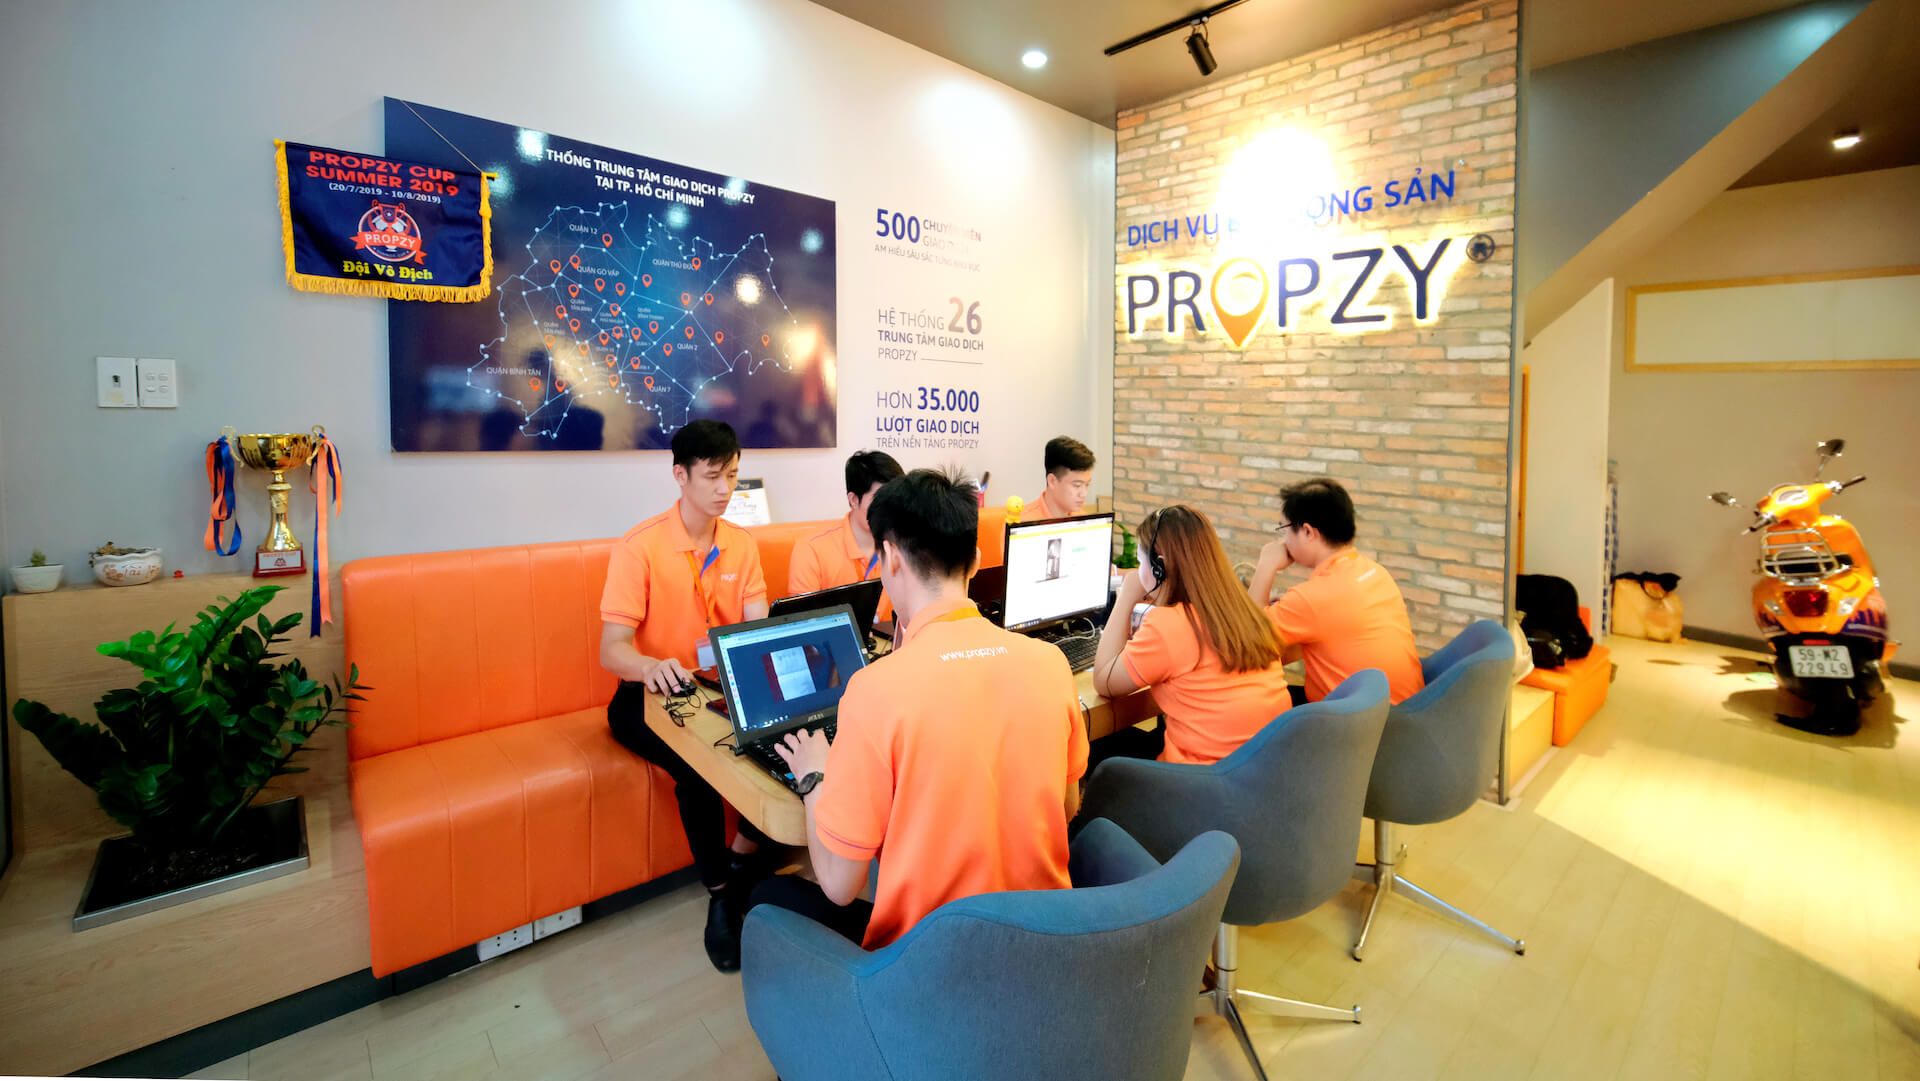 propzy-a-vietnamese-offline-to-online-real-estate-platform-raises-usd25-million-series-a